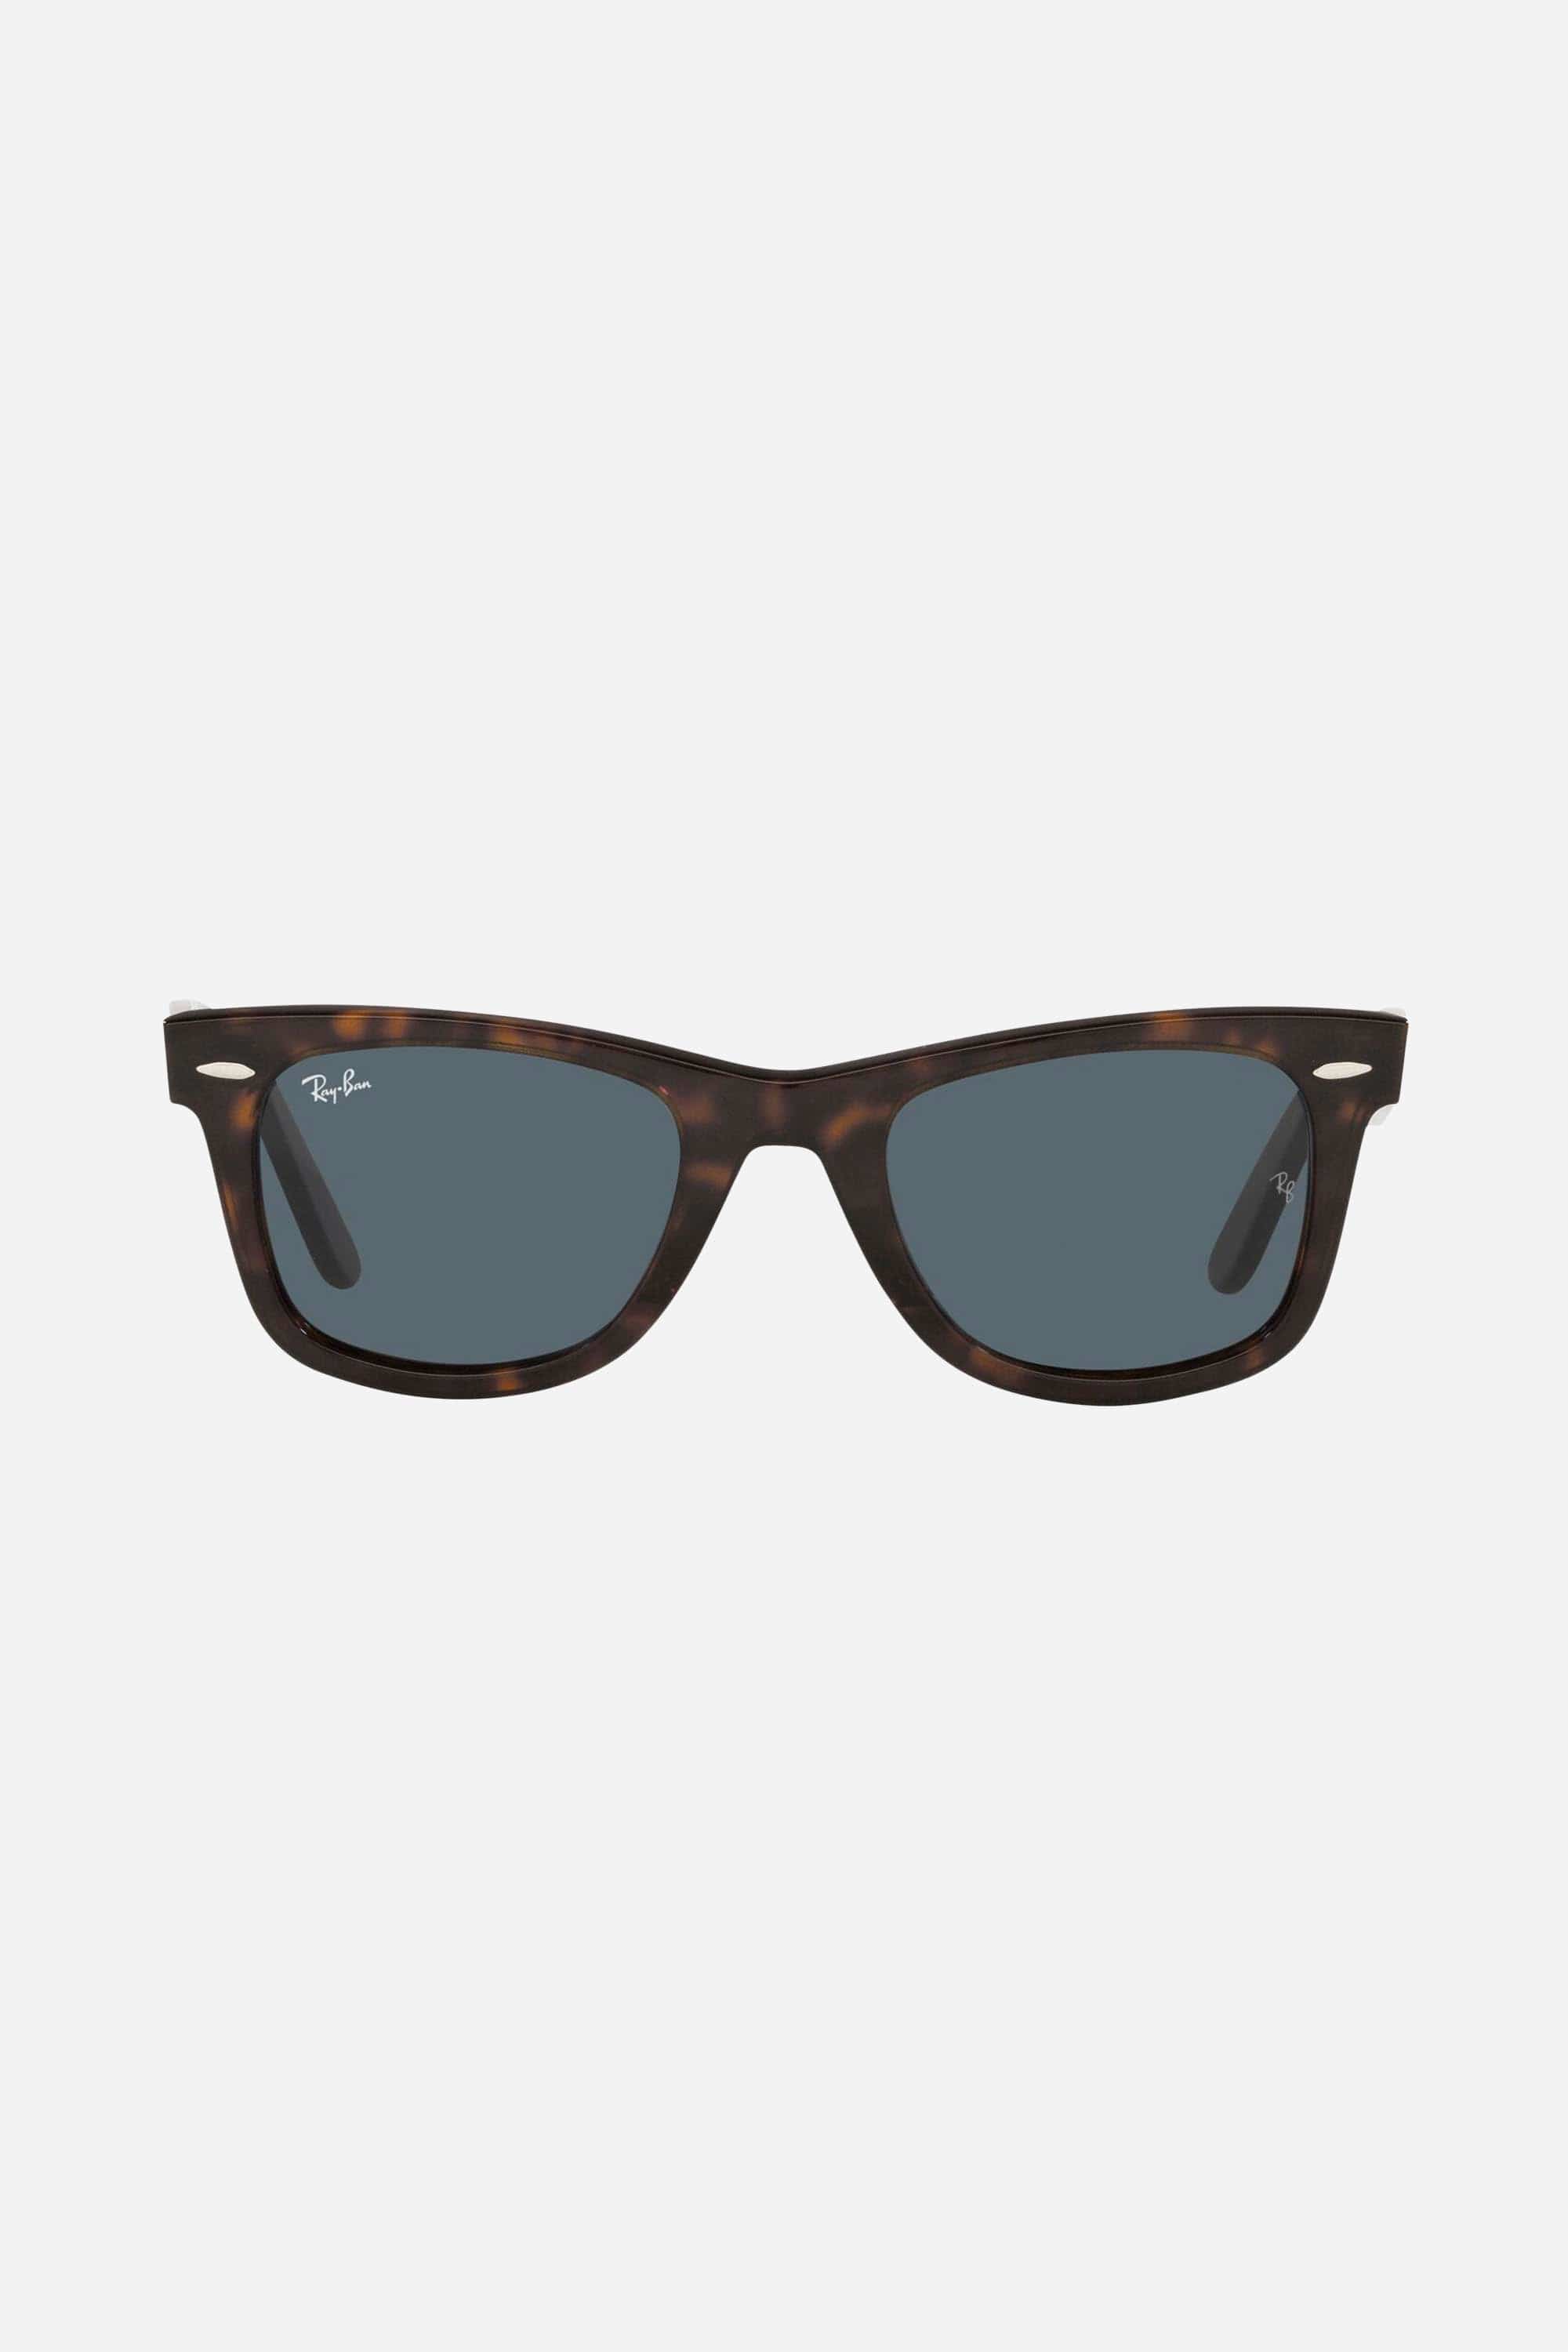 Ray Ban RB2140 wayfarer havana sunglasses - Eyewear Club